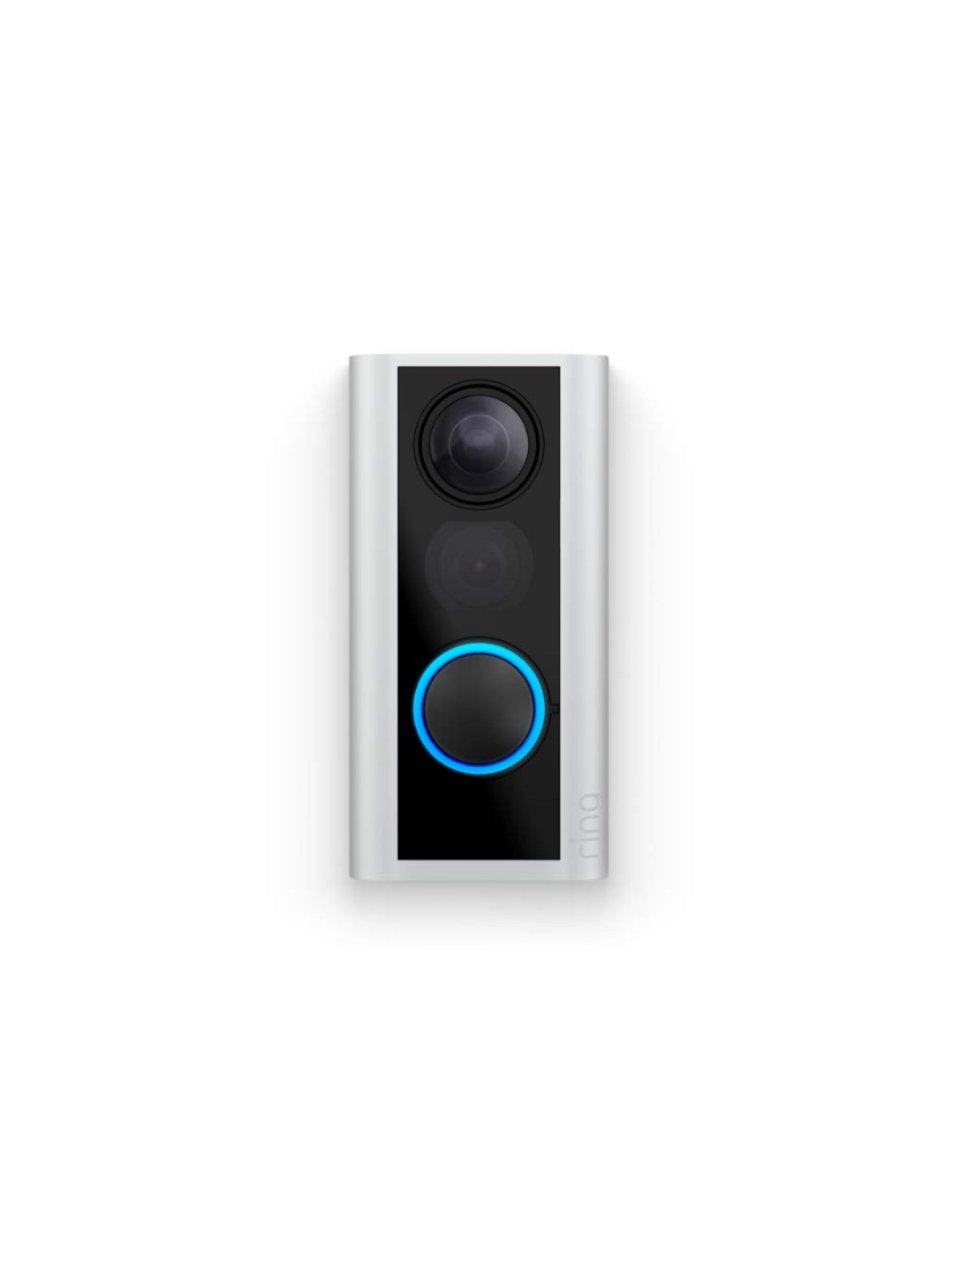 Amazon.com: Ring Peephole Cam - Smart vi